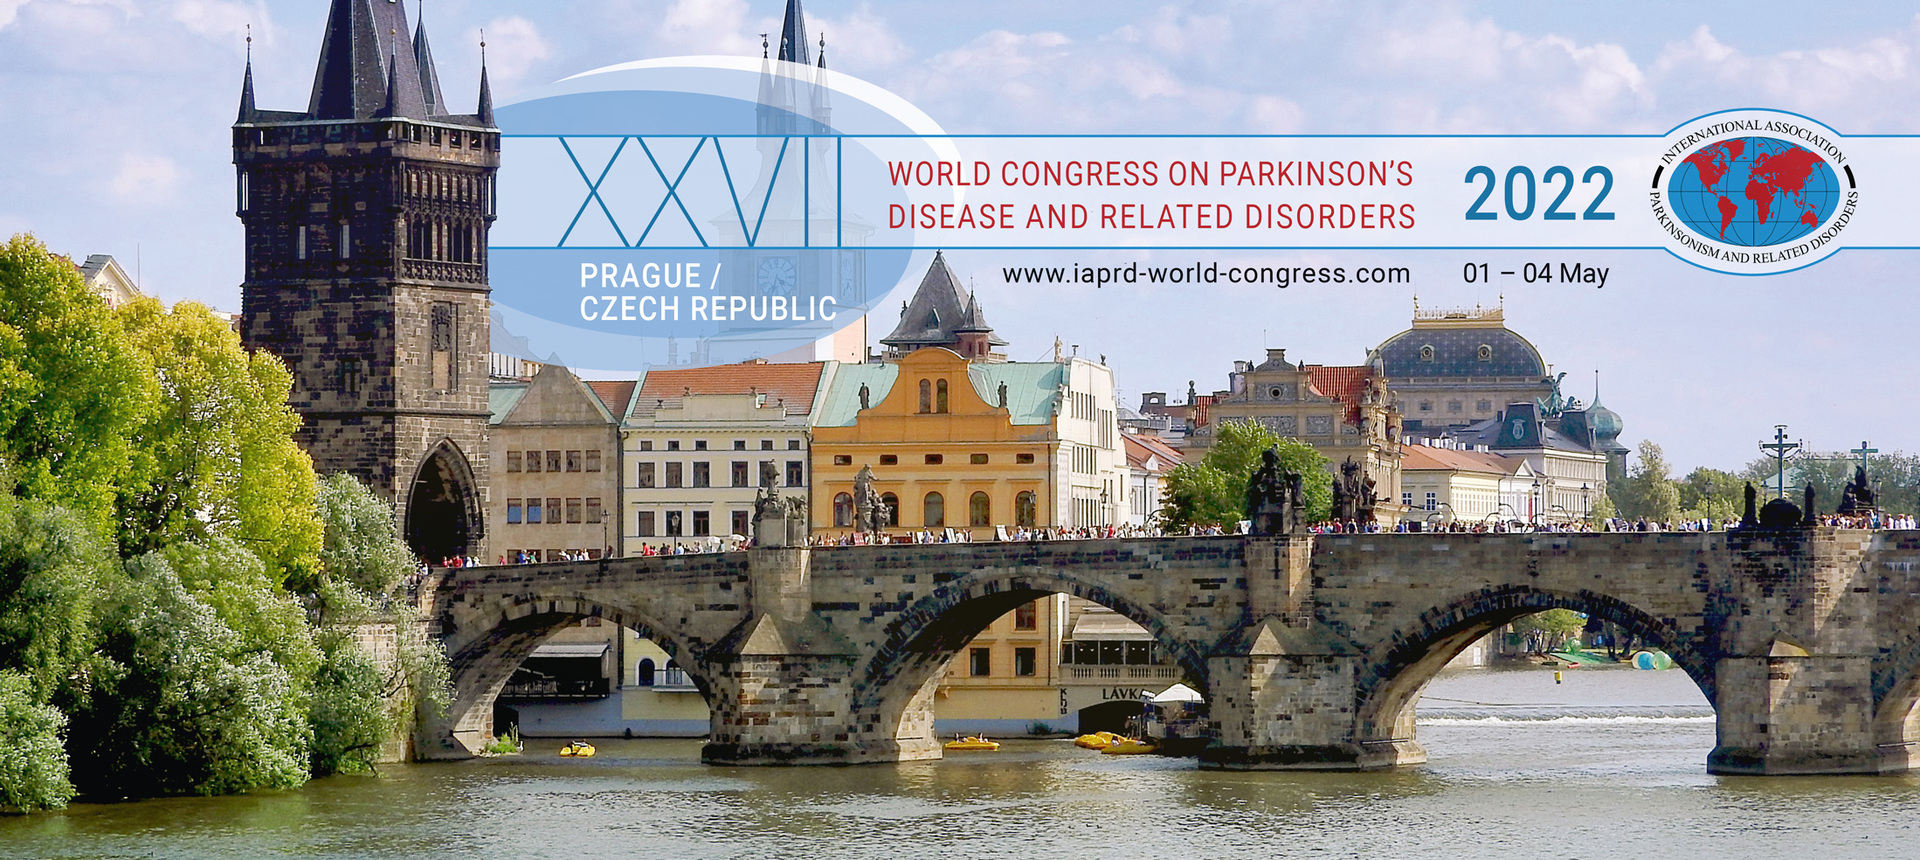 XXVII World Congress on Parkinson's Disease and Related Disorders, Praha 4, Hlavni mesto Praha, Czech Republic